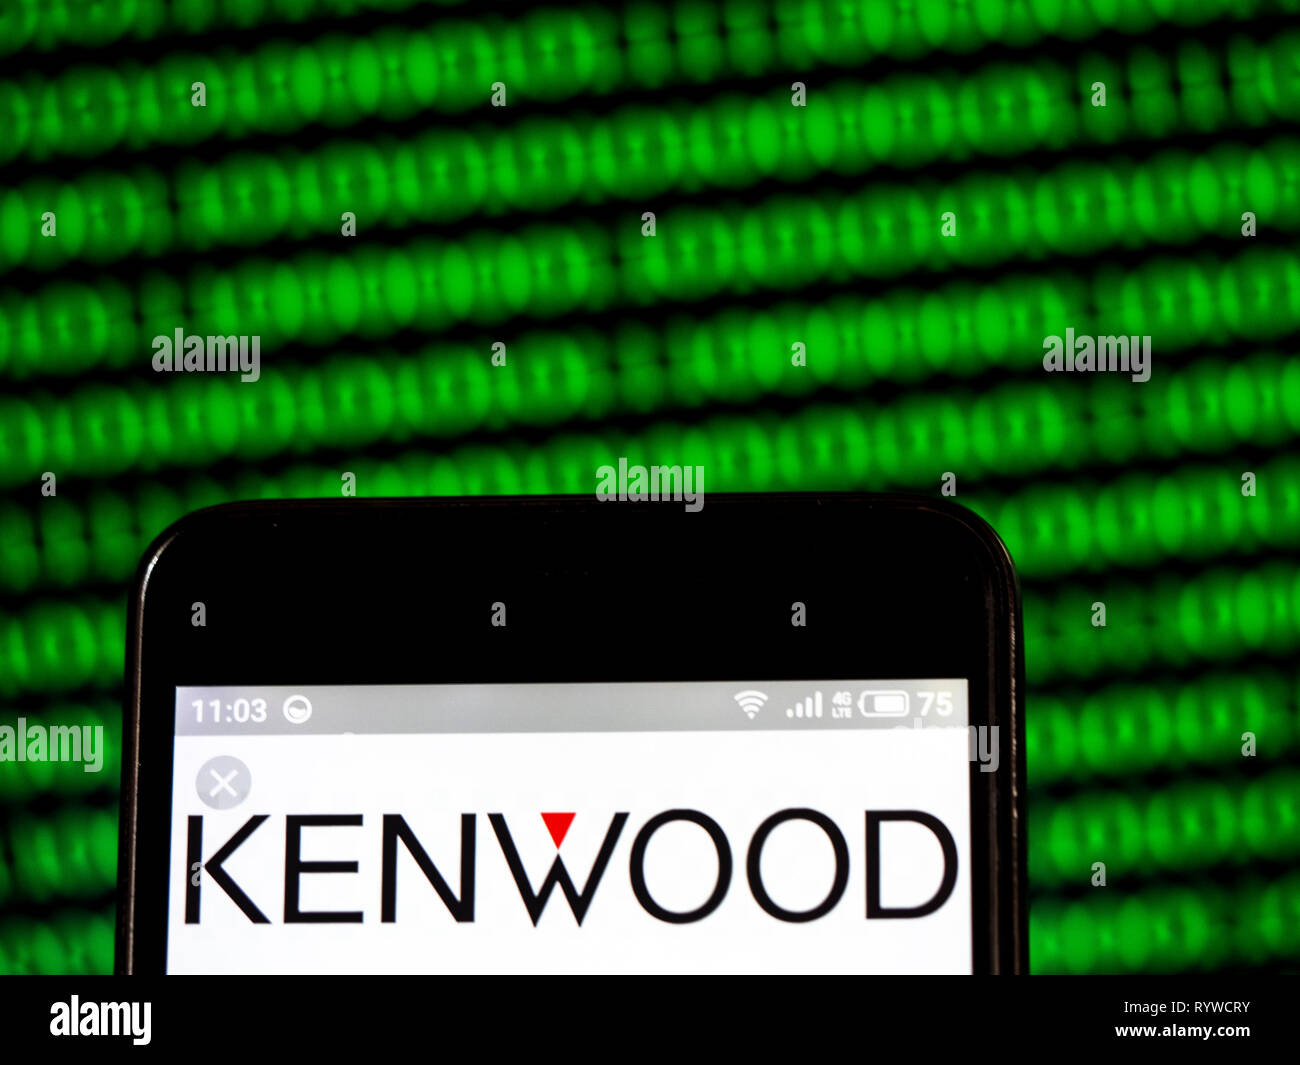 Kenwood Limited company logo seen displayed on smart phone Stock Photo -  Alamy